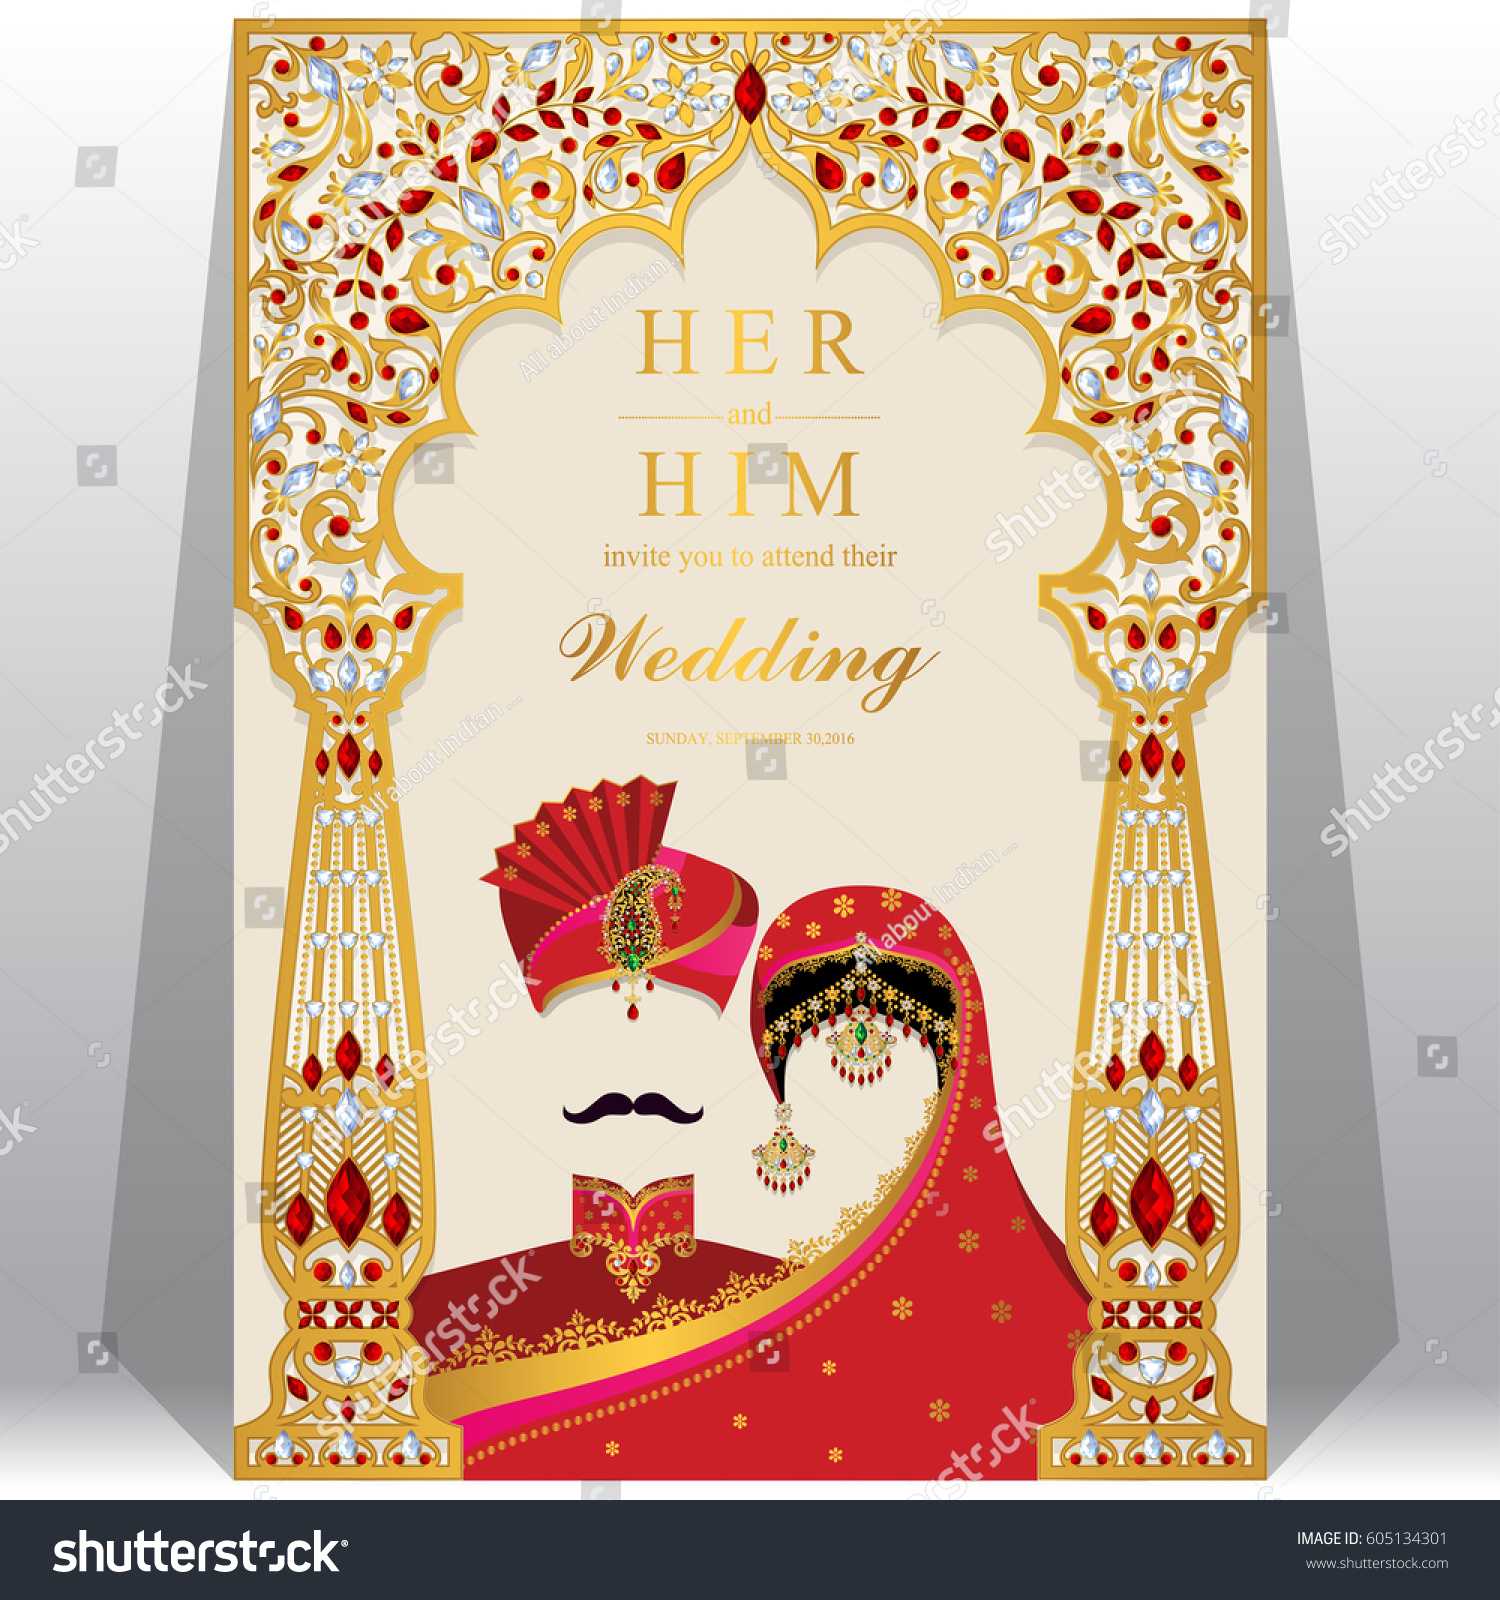 Indian Wedding Invitation Card Templates Gold Stock Vector With Regard To Indian Wedding Cards Design Templates